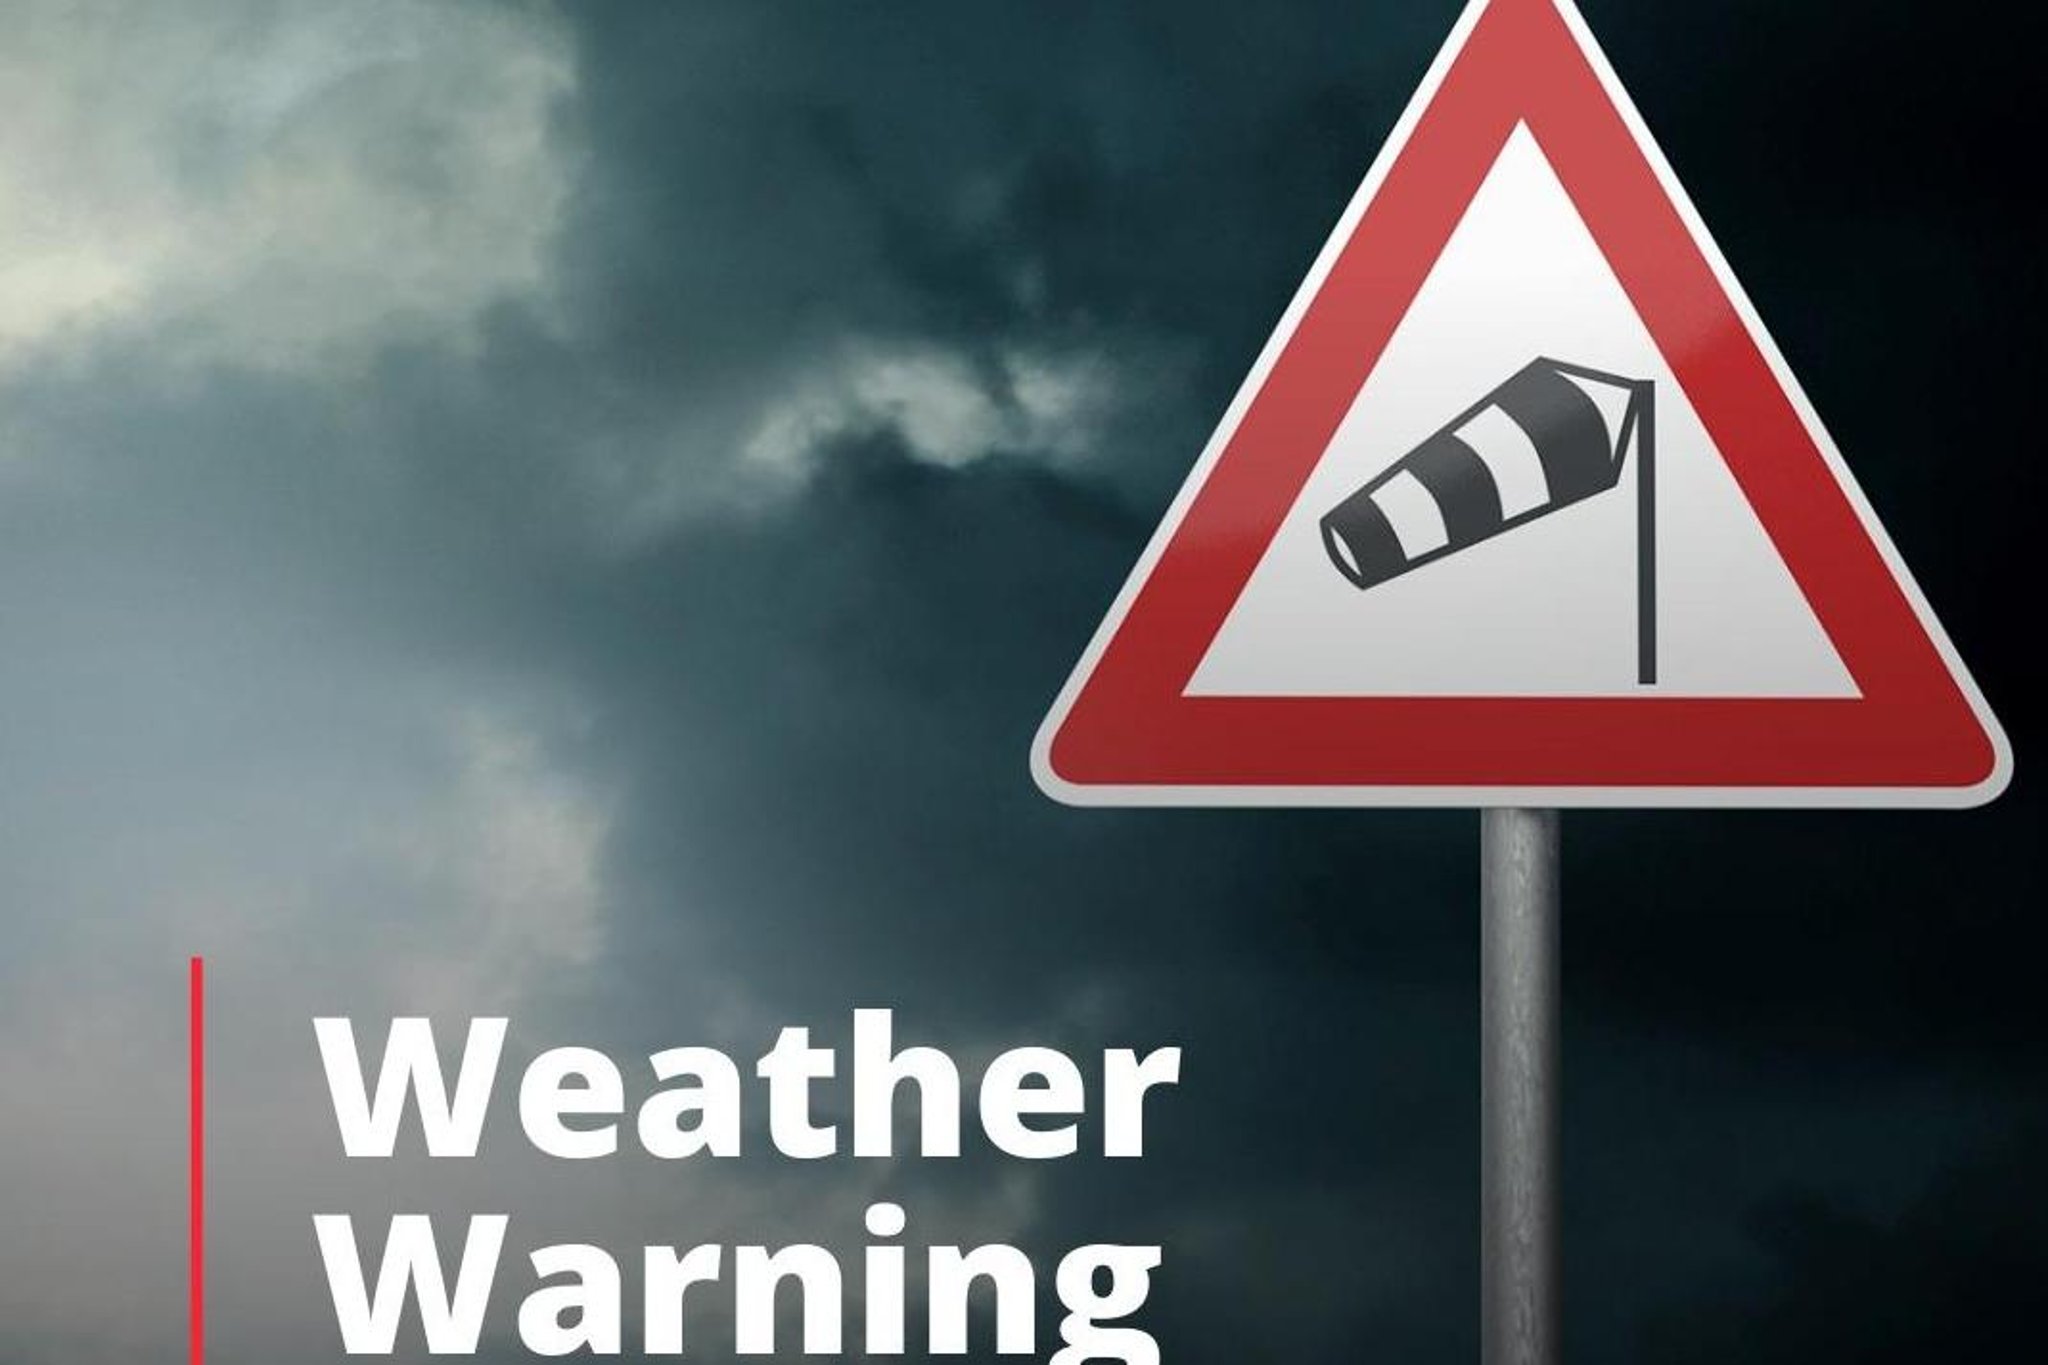 Met Office weather warning - severe gales possible